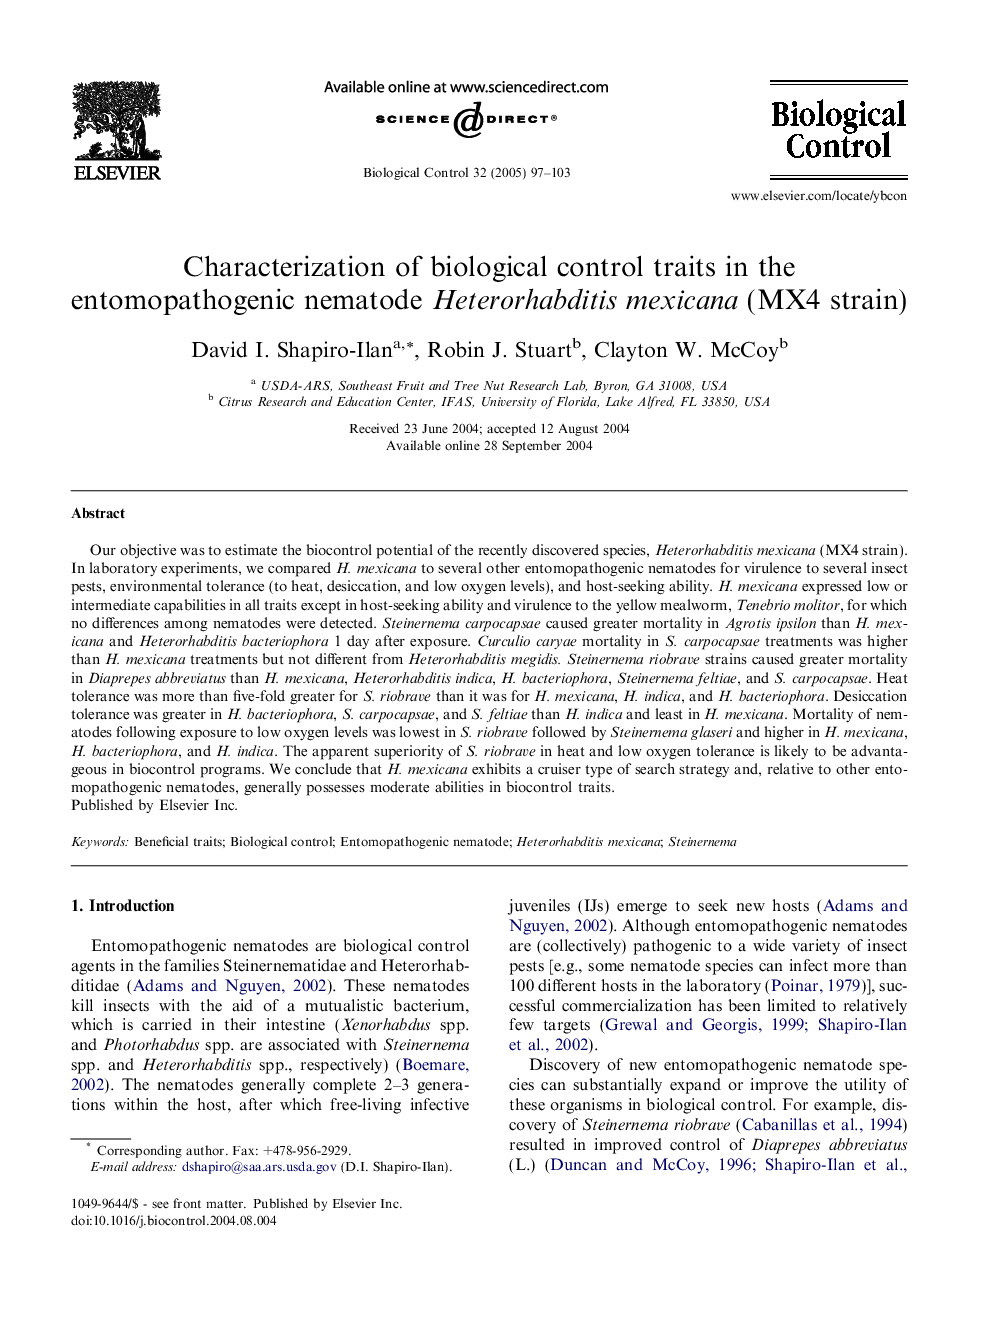 Characterization of biological control traits in the entomopathogenic nematode Heterorhabditis mexicana (MX4 strain)